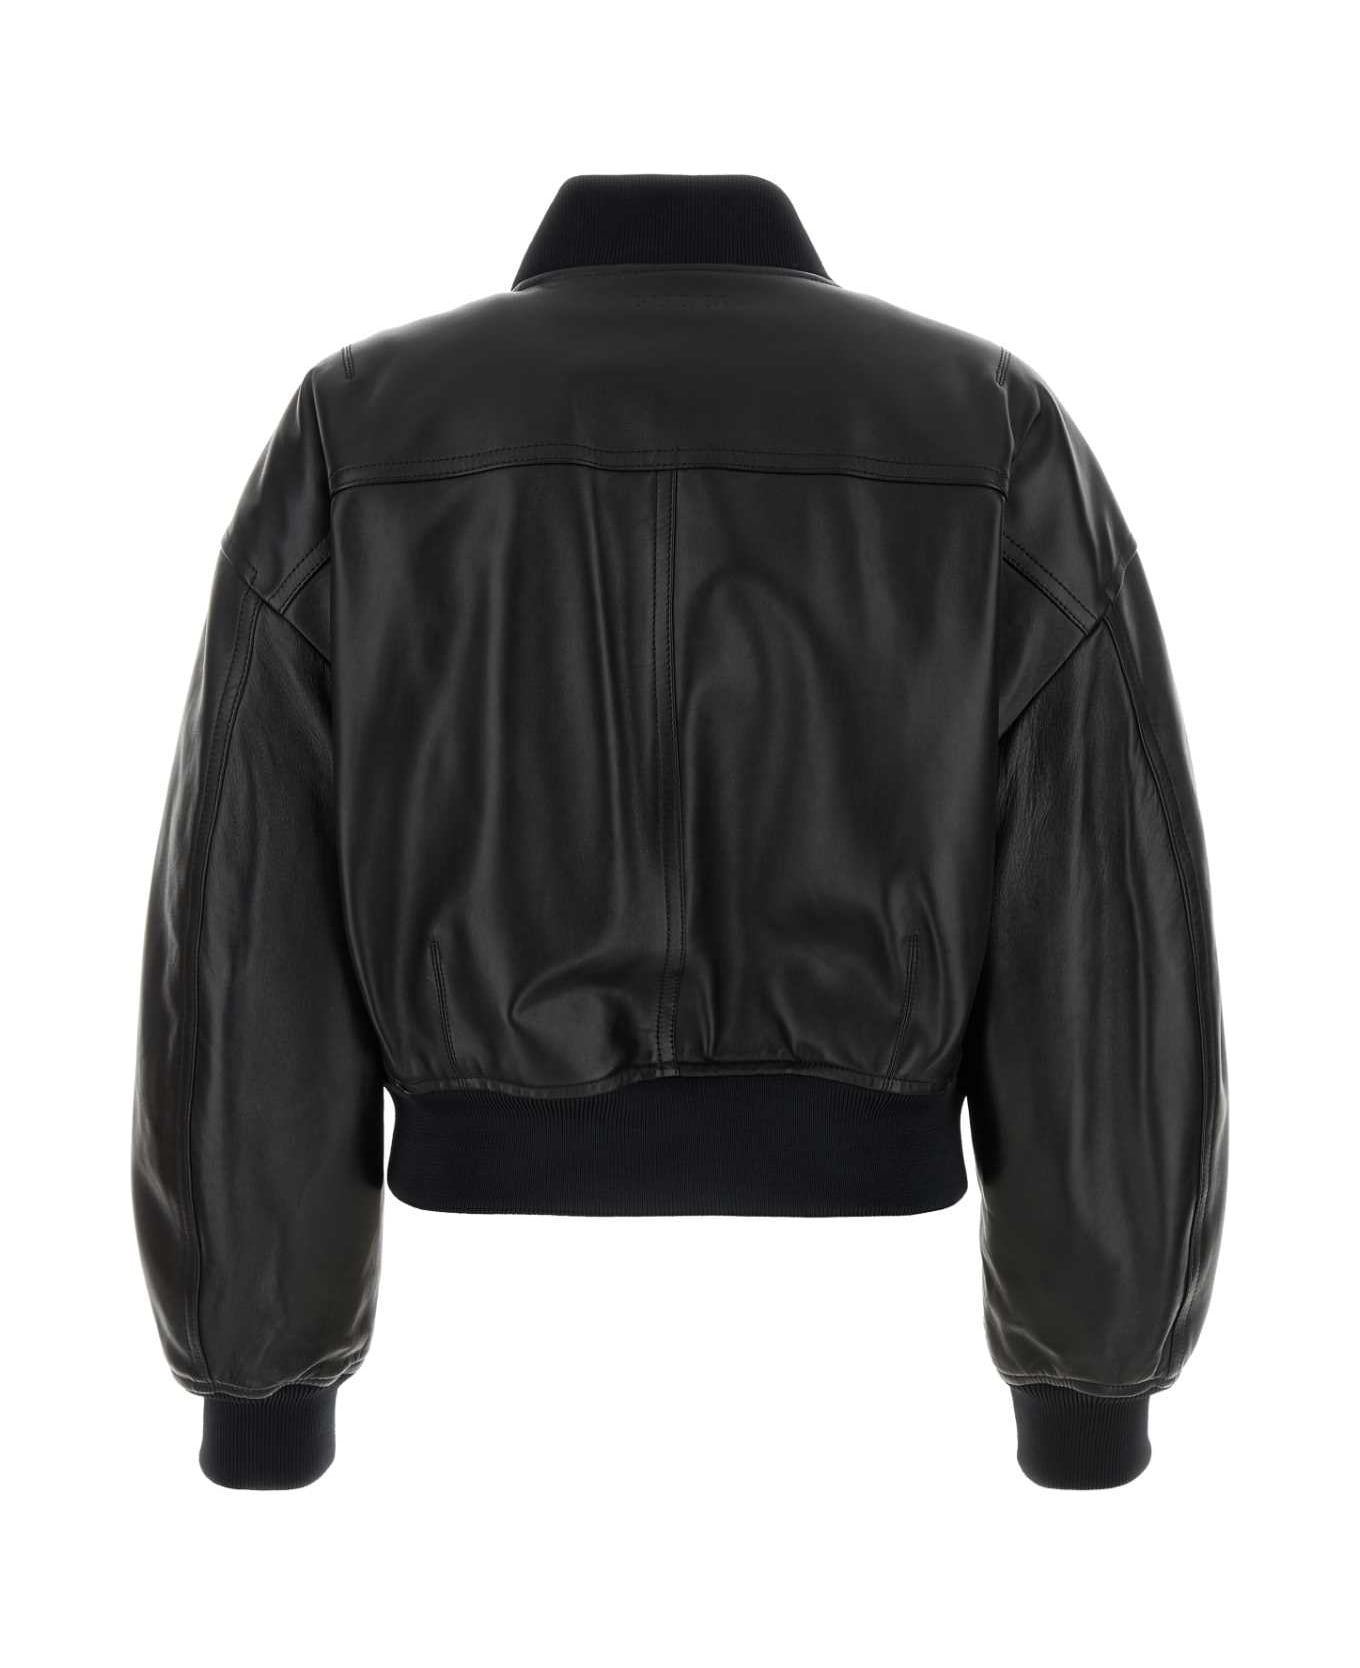 Gucci Black Leather Bomber Jacket - Black ジャケット